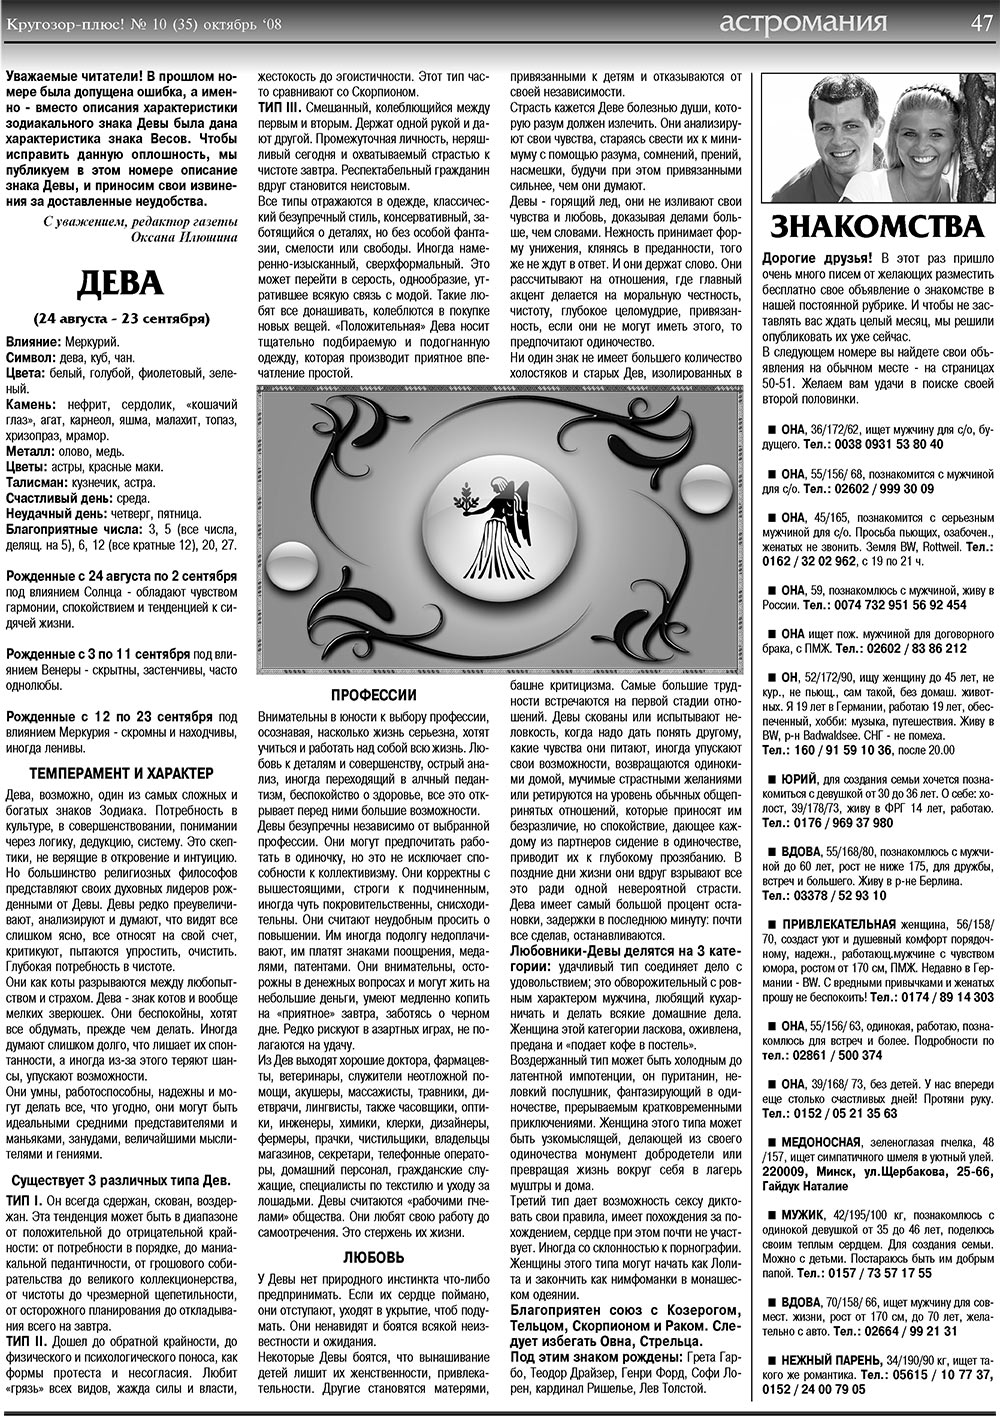 Кругозор плюс! (газета). 2008 год, номер 10, стр. 47